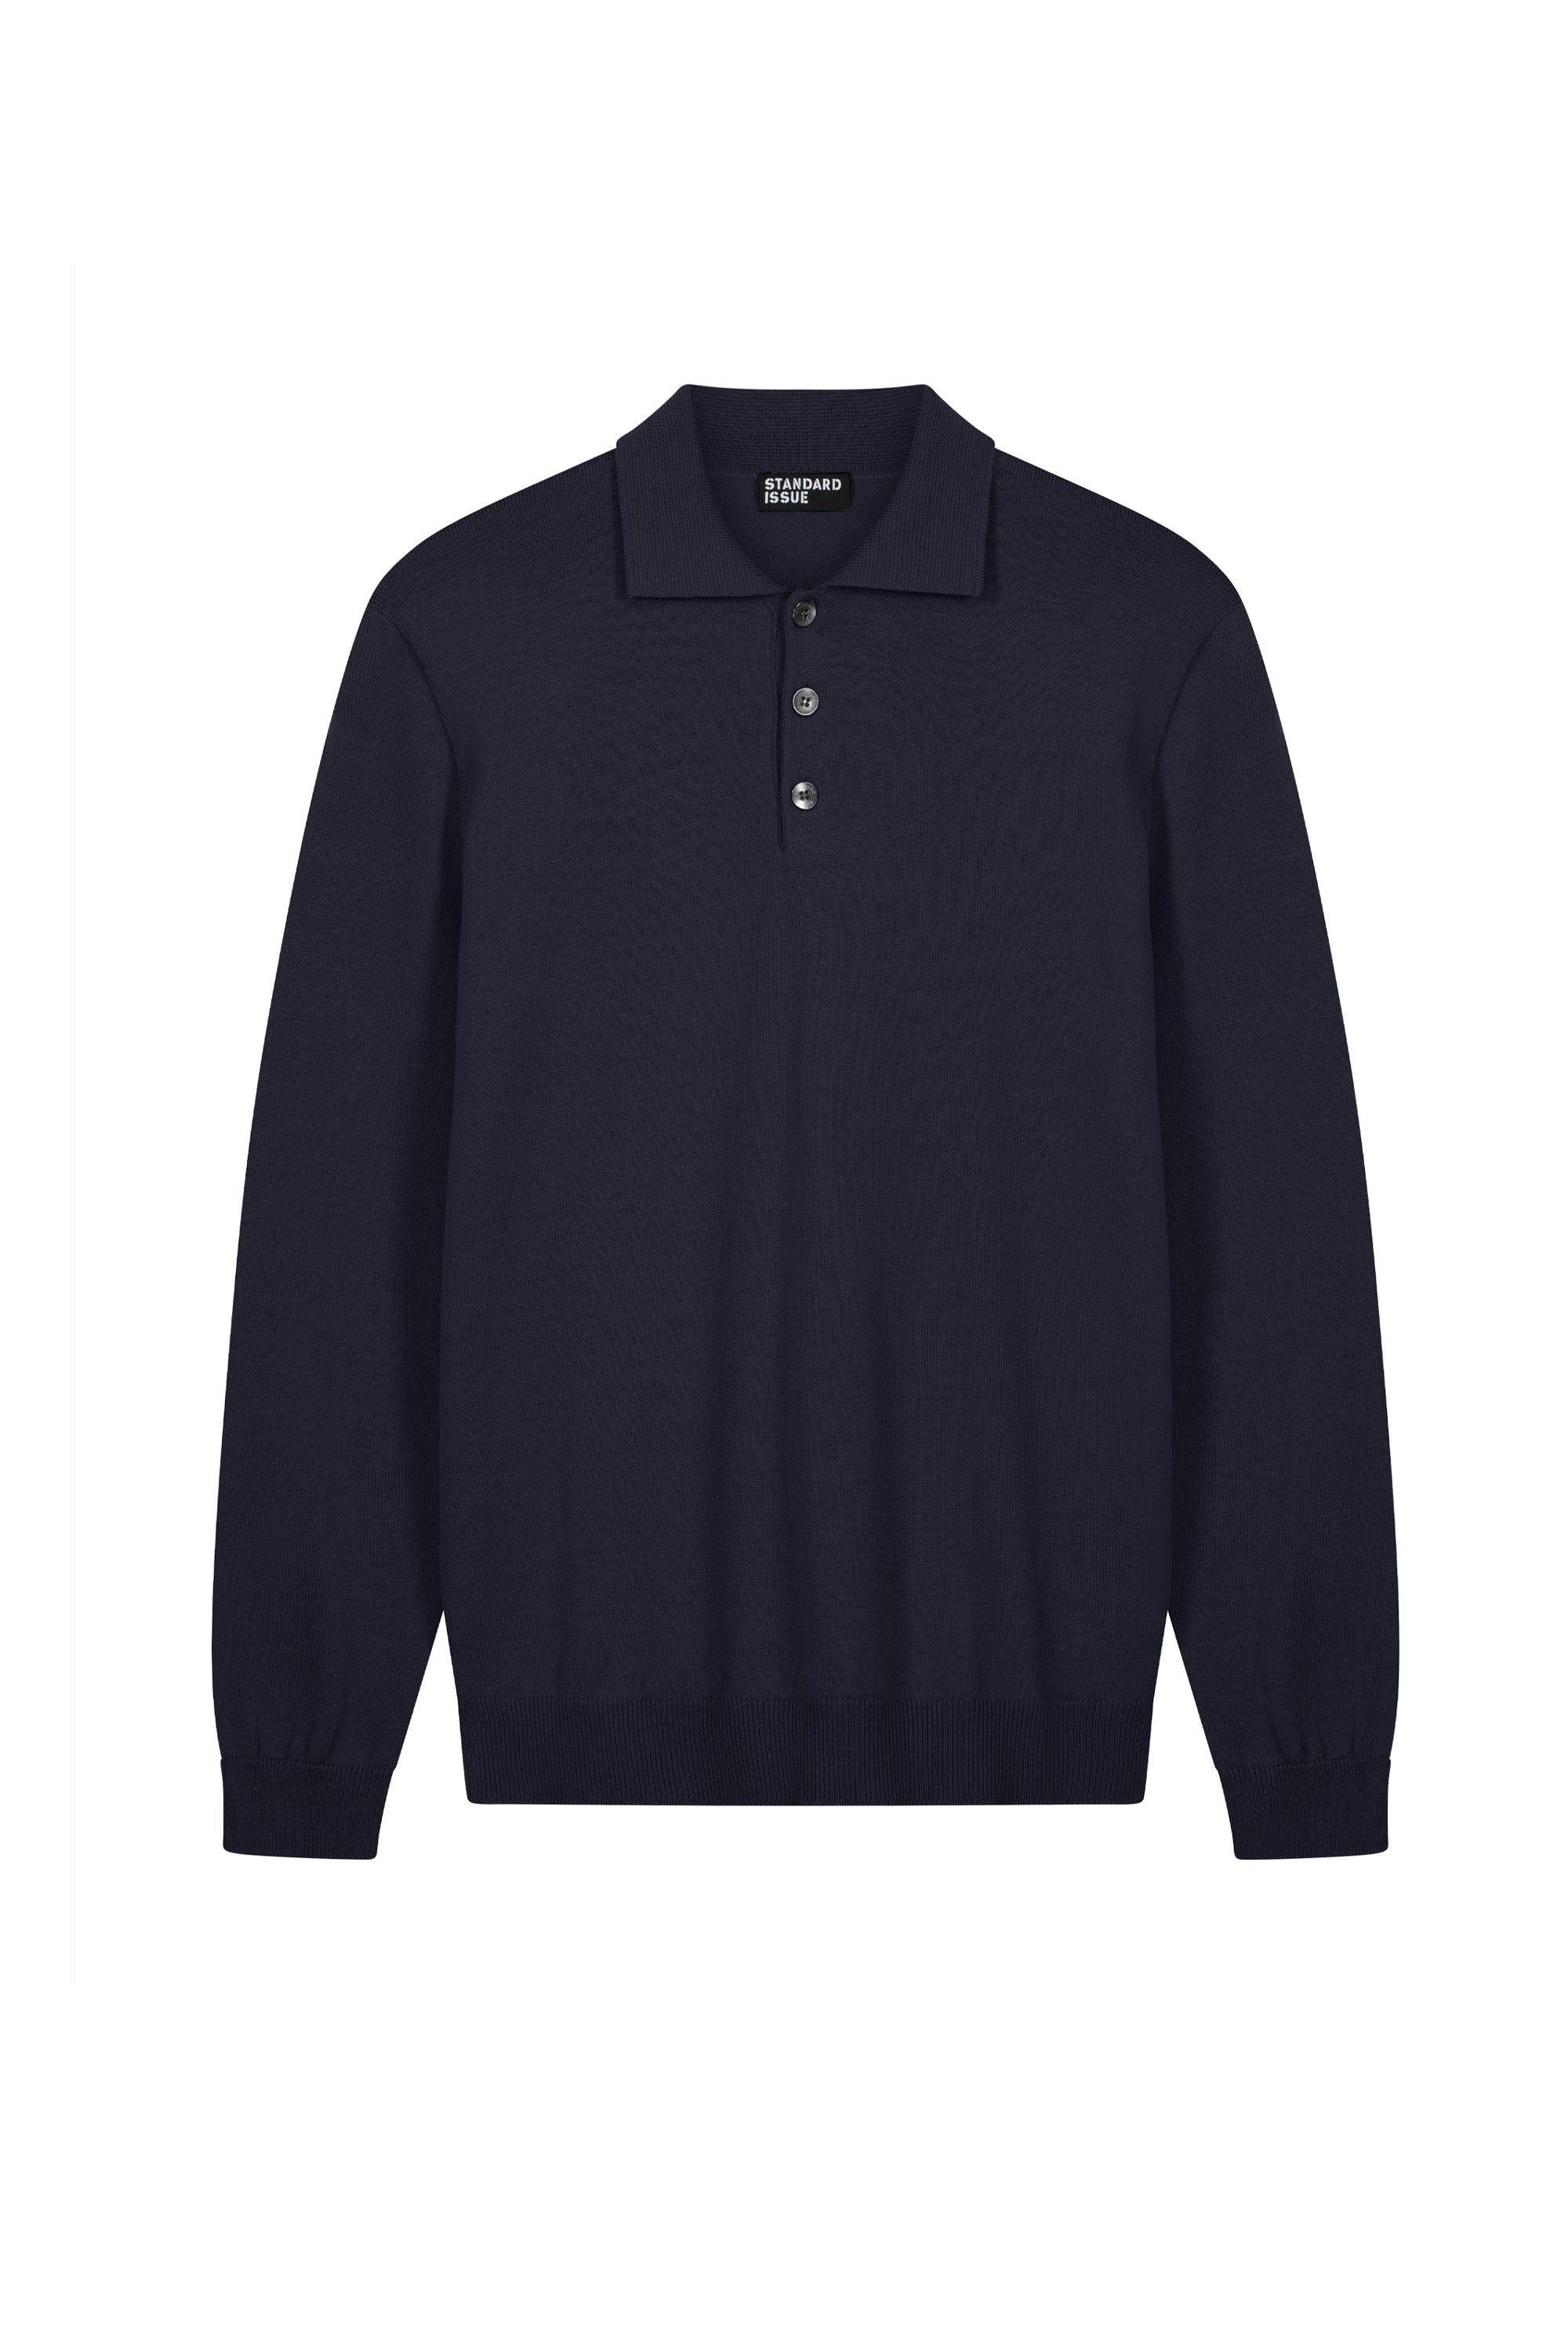 Standard Issue Merino Polo Shirt | Navy